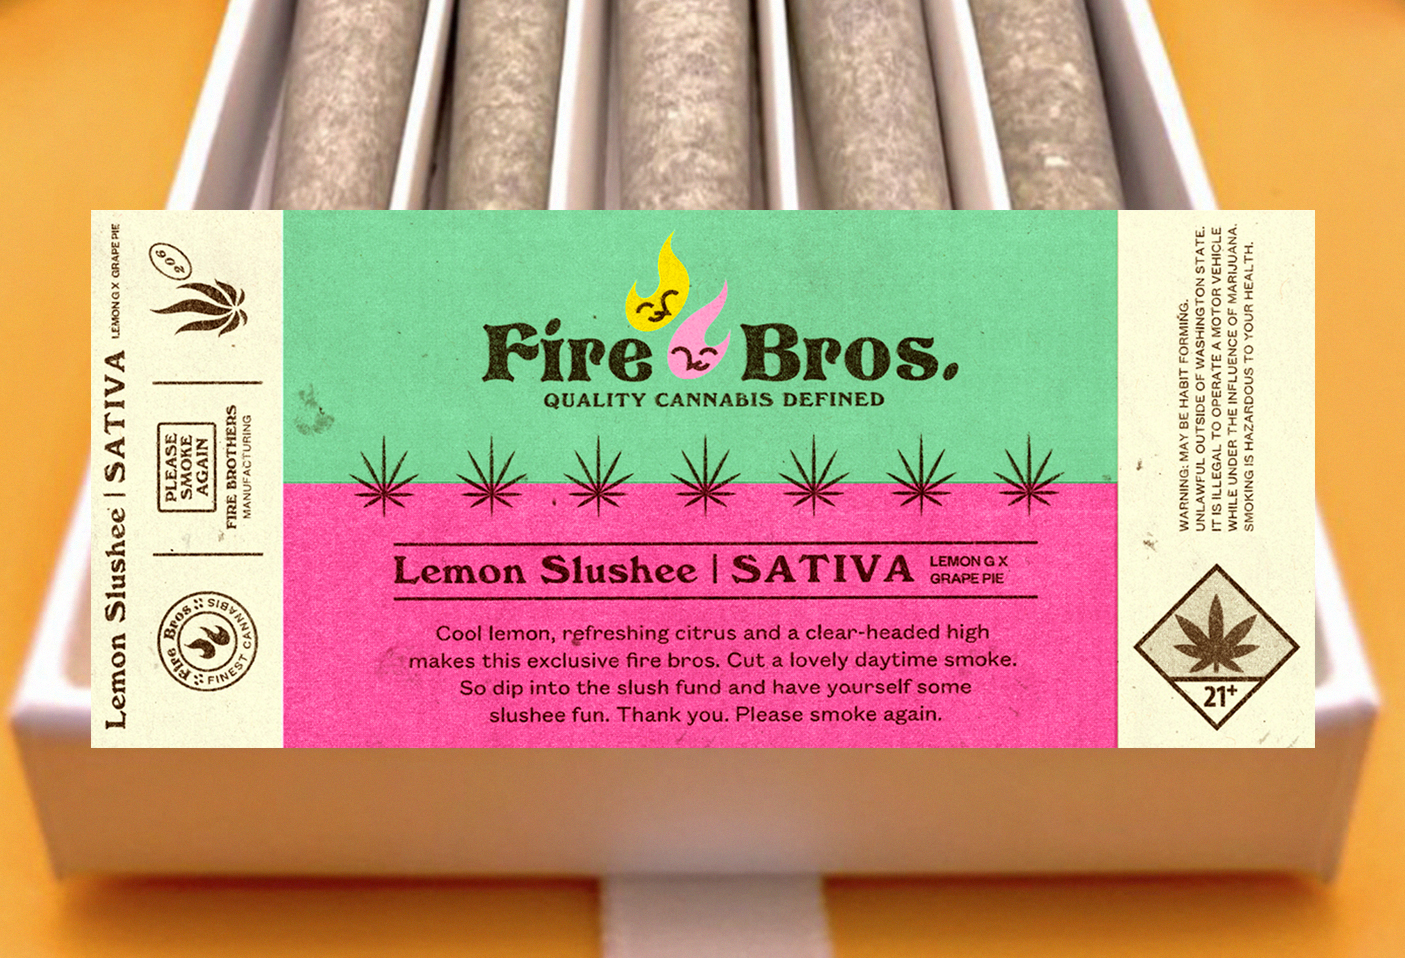 firebros-bros-fire-seattle-weed-balze-herb-206-branding-logo-vacaliebres-maekshiftstudio-joint-blunt